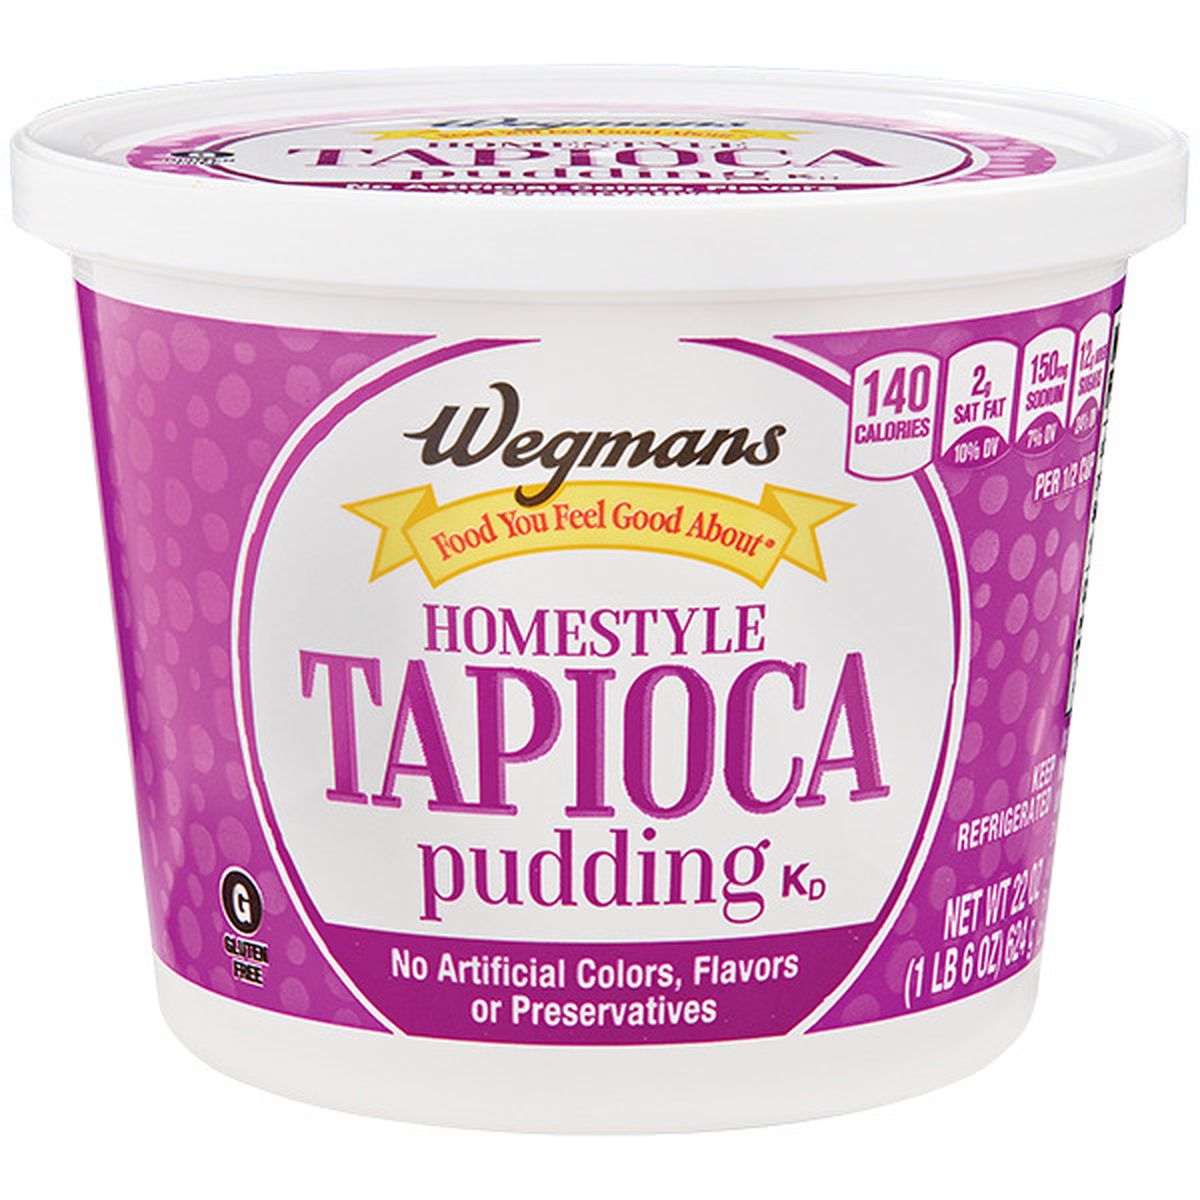 Calories in Wegmans Homestyle Tapioca Pudding